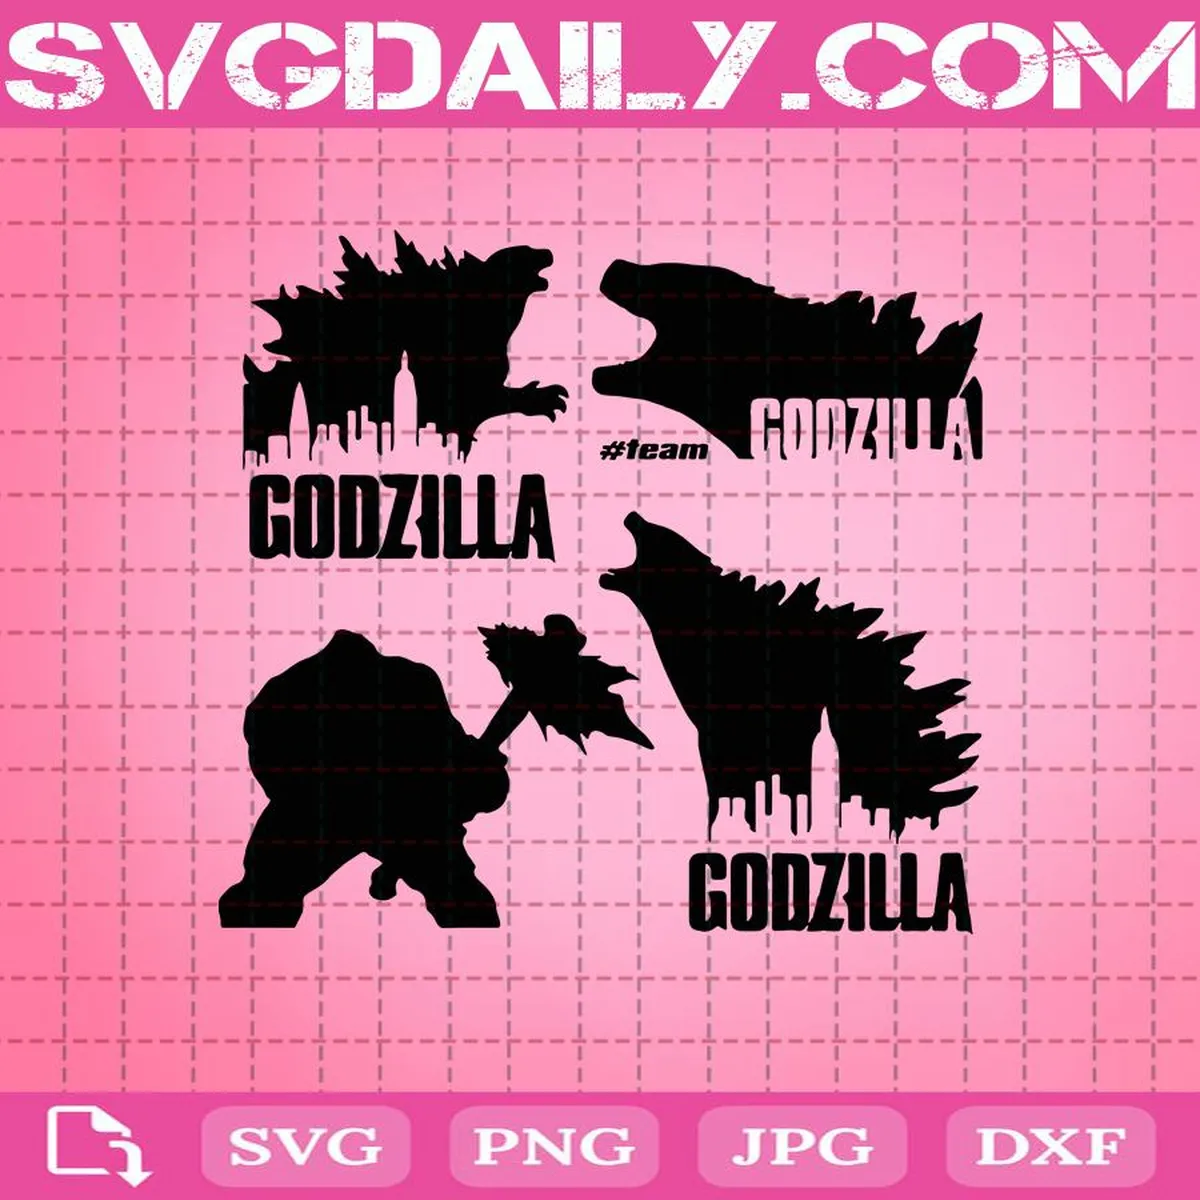 Godzilla Svg Bundle, Godzilla Vs Kong Svg, Team Kong Svg, Team Godzilla Svg, Kong Love Svg, Godzilla Love Svg, Team Godzilla Vs Team Kong Svg